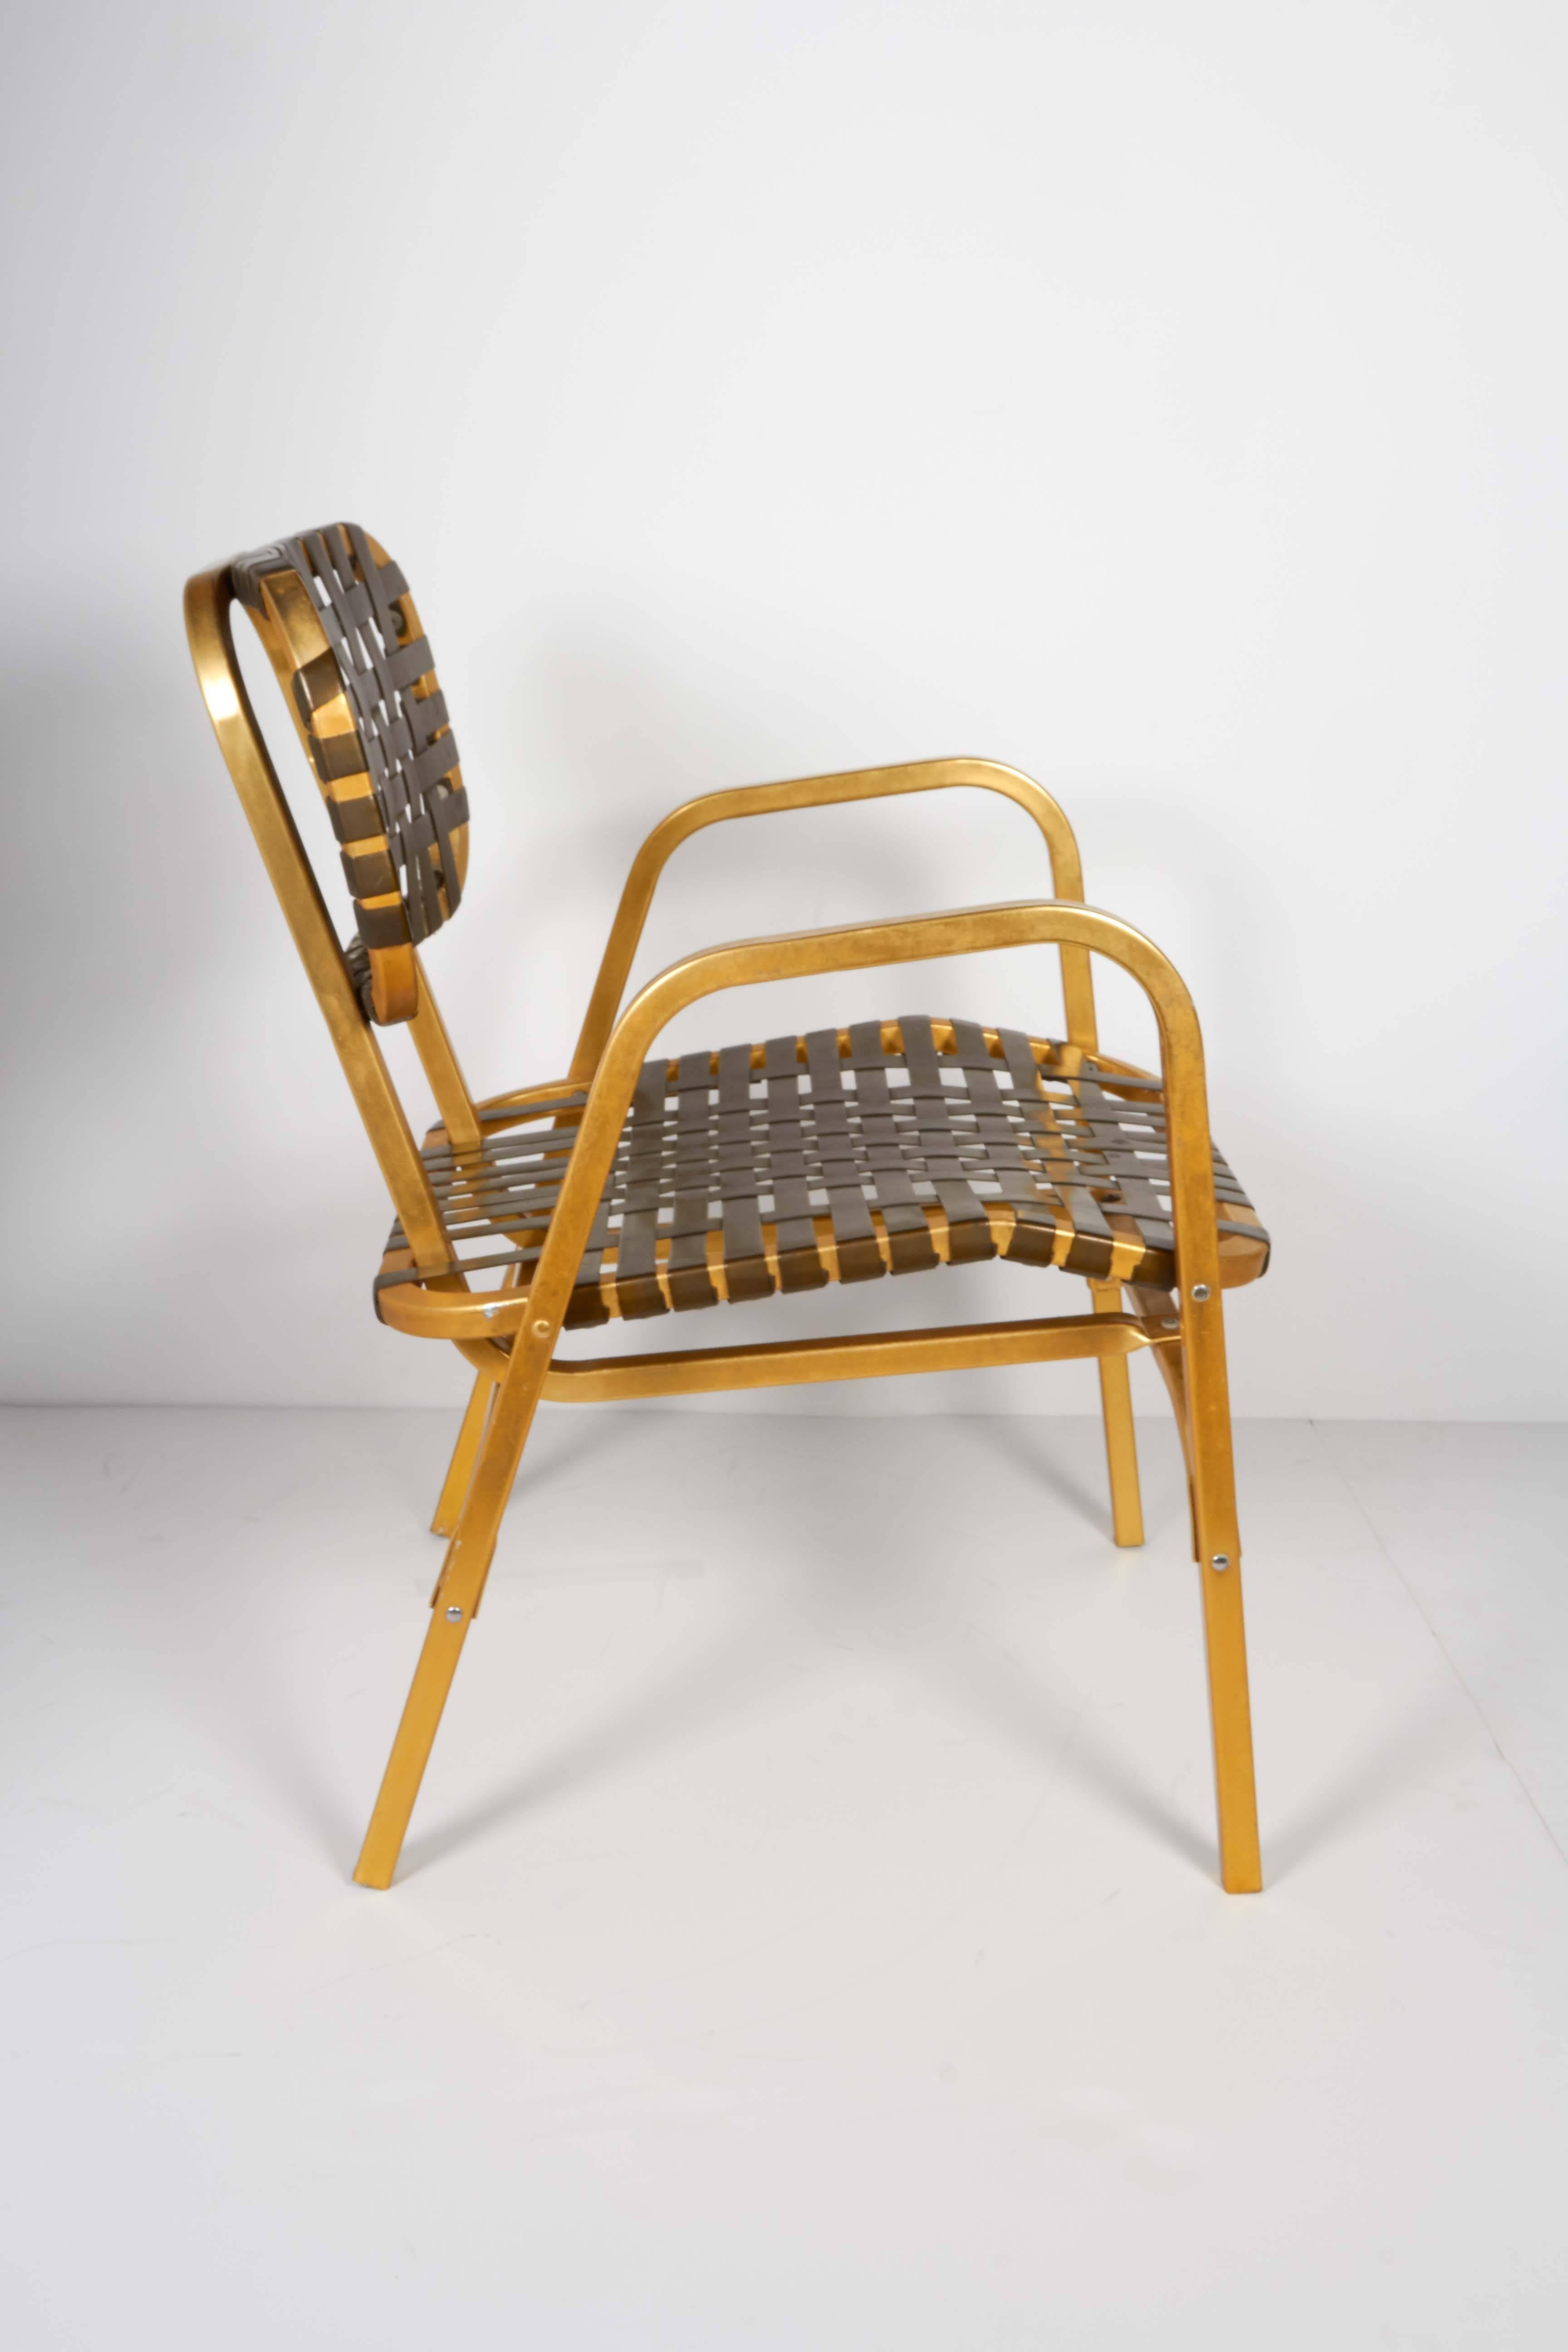 20th Century Pair of 1950's Mid-Century Modern Leisure Garden or Patio Chairs